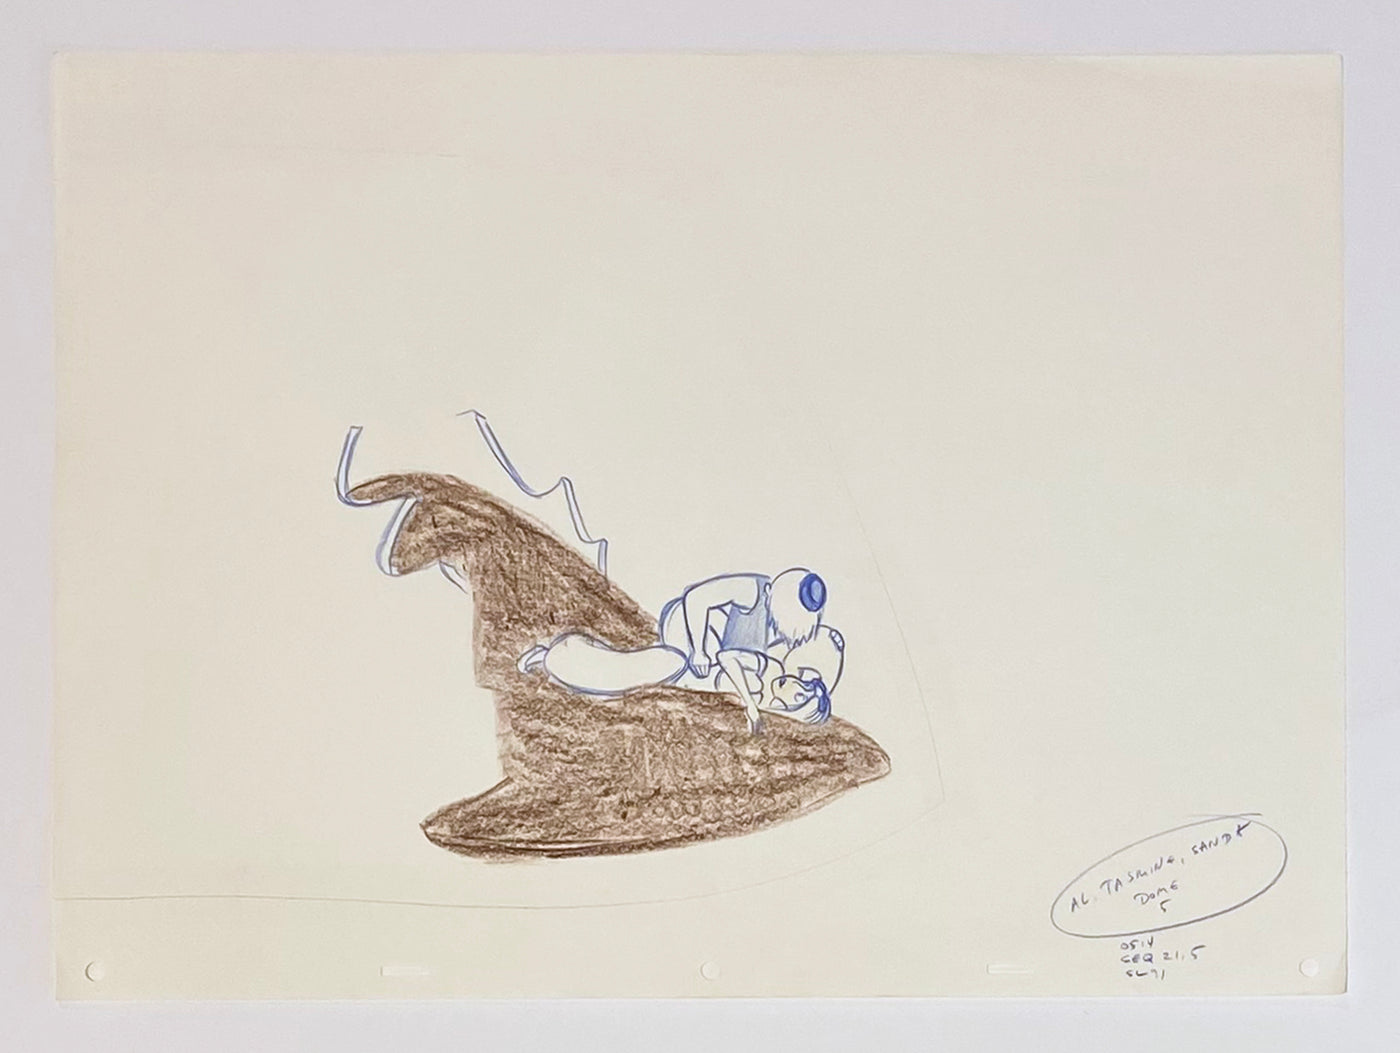 Original Walt Disney Production Drawing from Aladdin featuring Aladdin and Jasmine